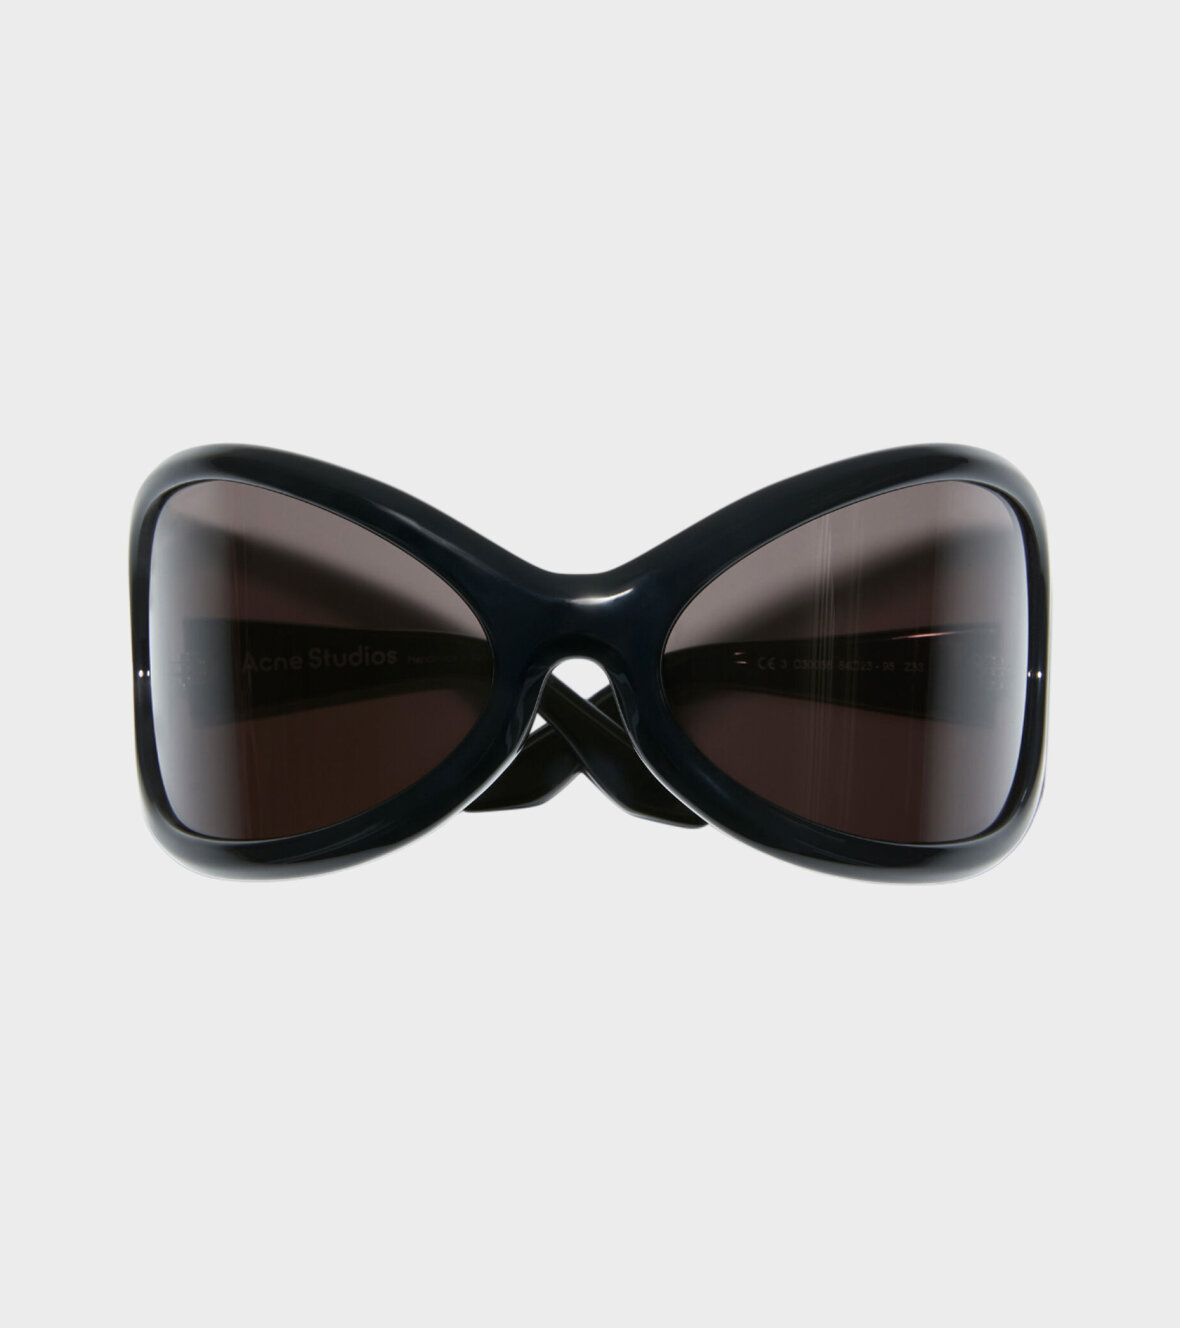 Adams - Acne Studios Frame Sunglasses